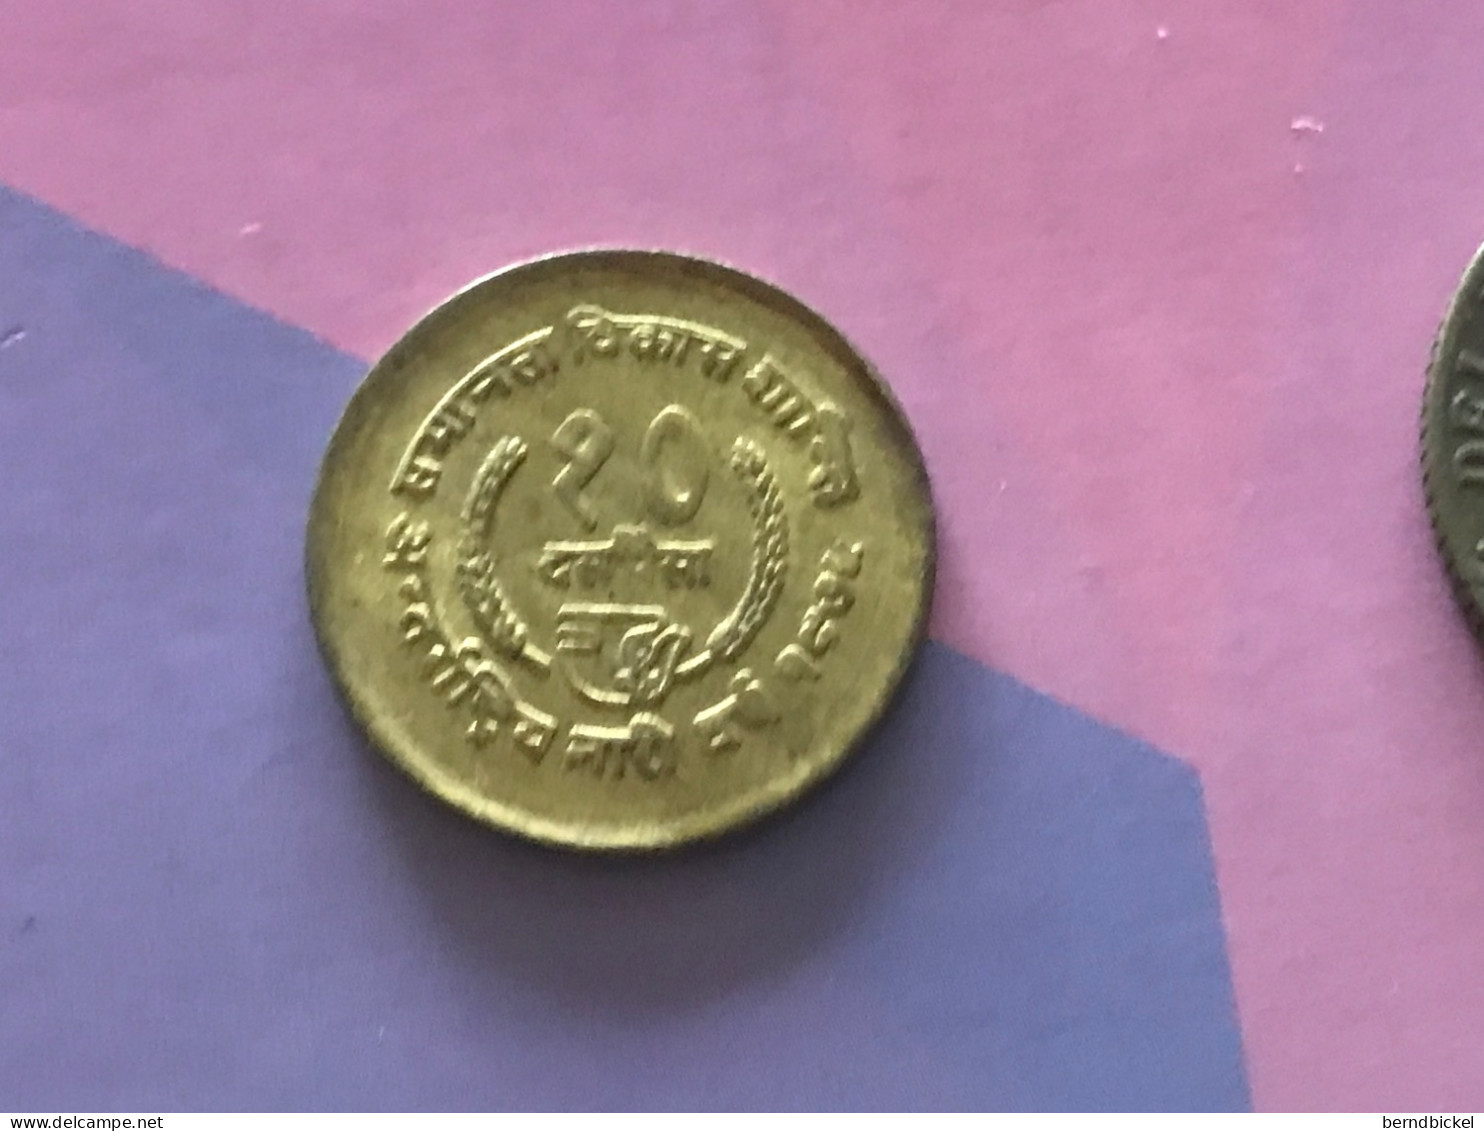 Münze Münzen Umlaufmünze Nepal 10 Paise 1975 FAO - Nepal